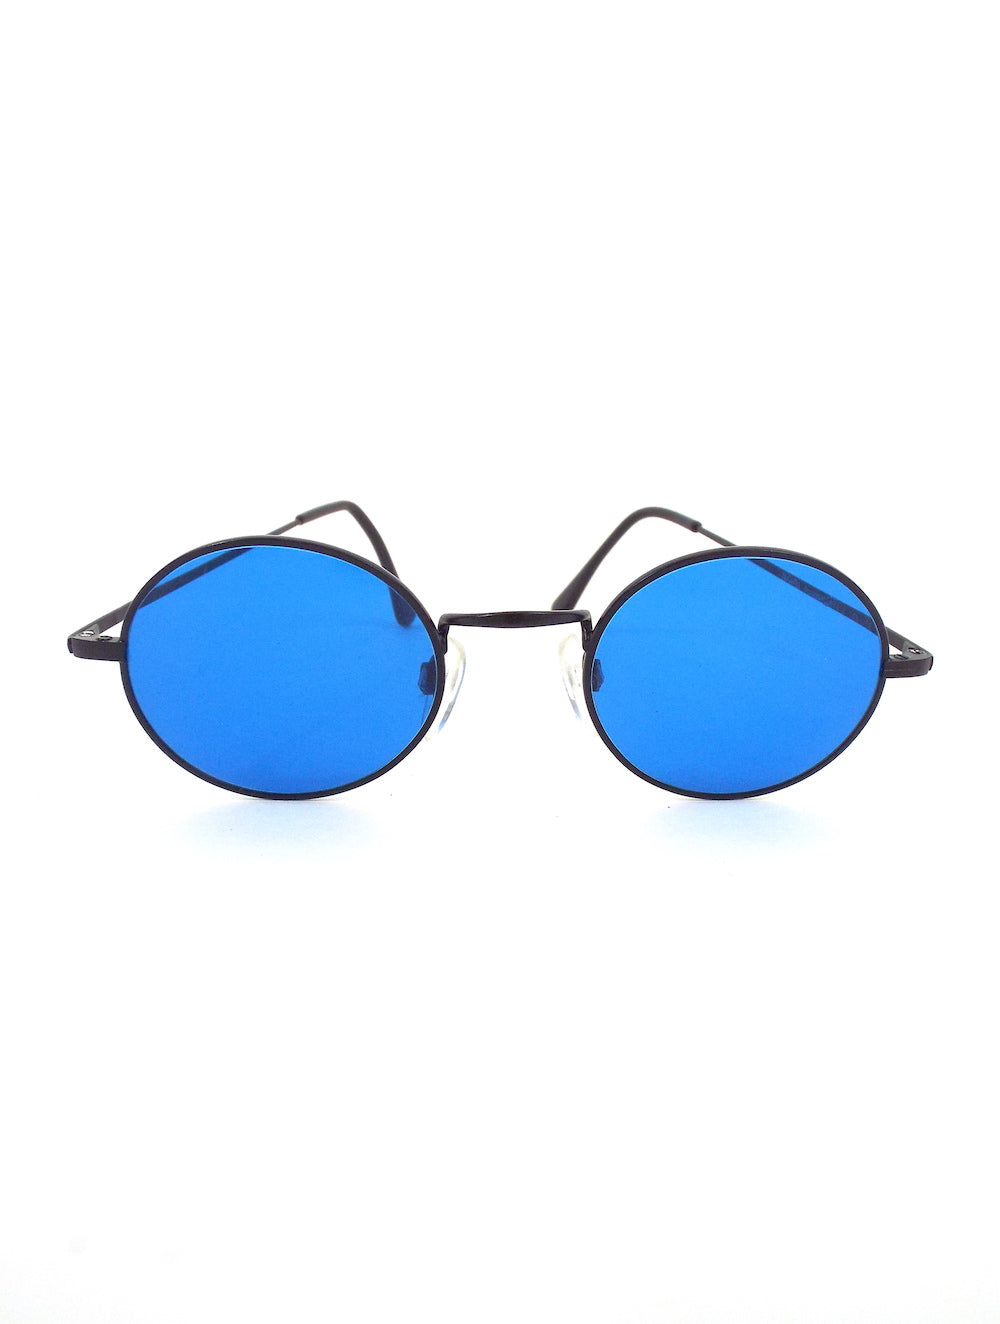  Vintage 90s Round Blue Tinted Sunglasses